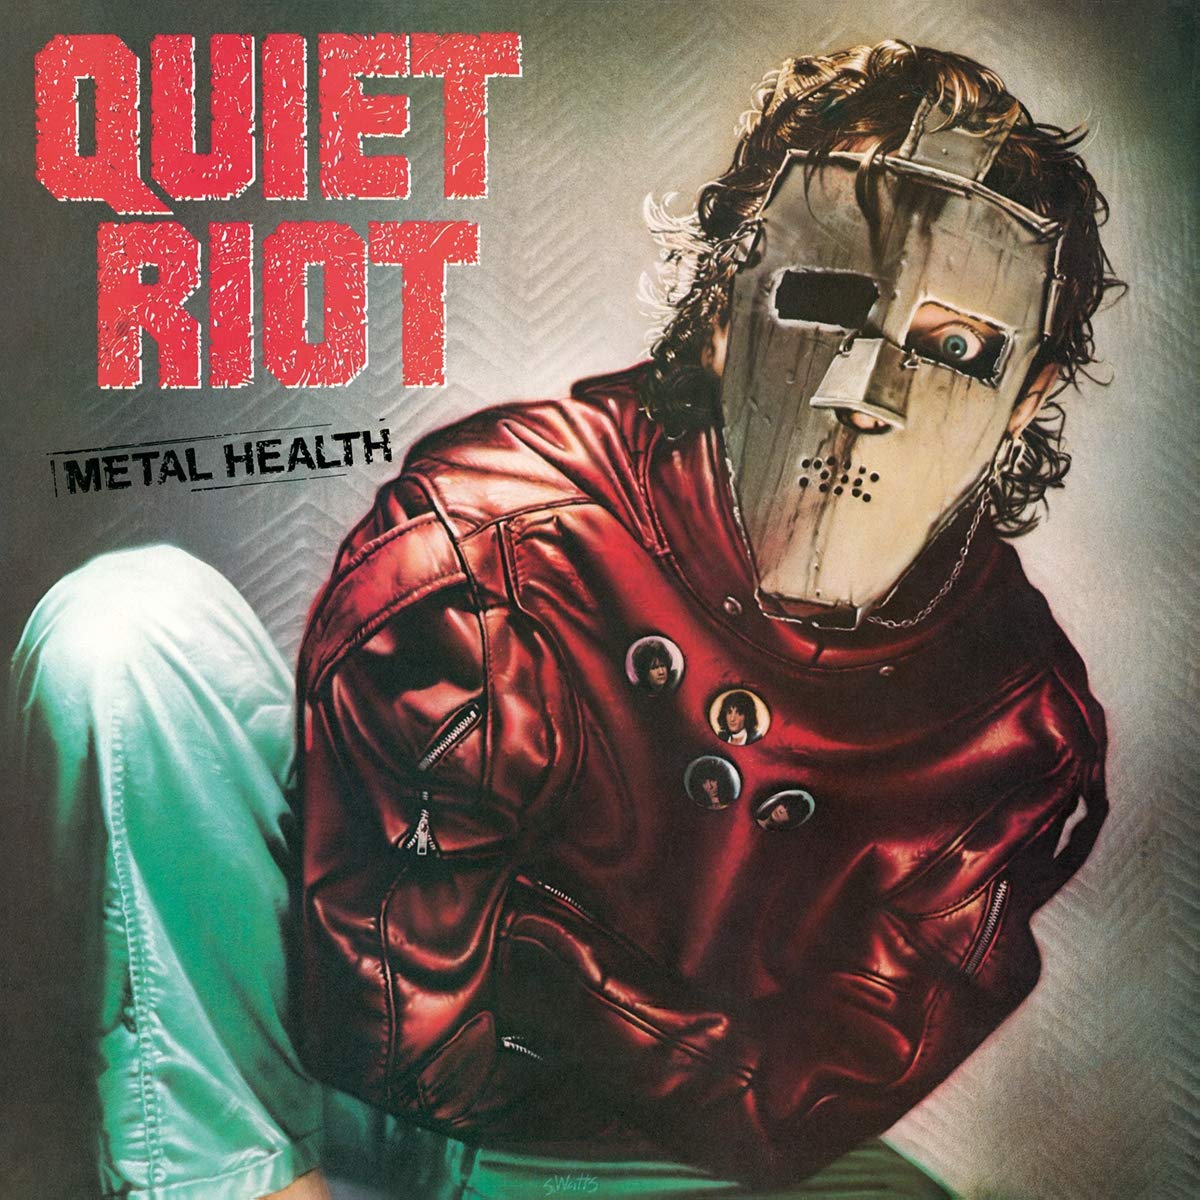 Metal Health